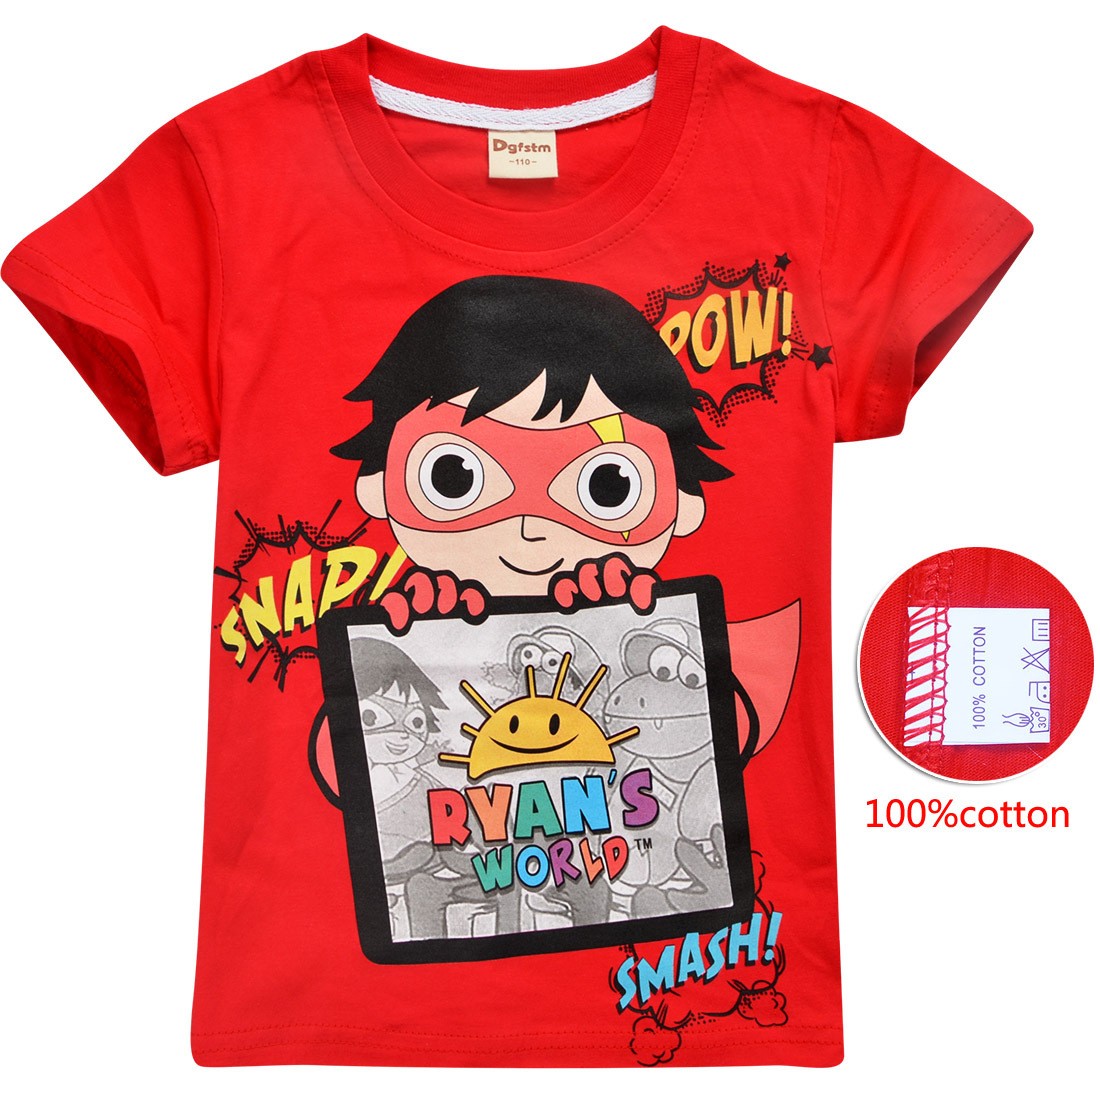 2019 new summer children's clothing t-shirt christmas tops girl t-shirts ryan play review mask boy cartoon kid t-shirt tees